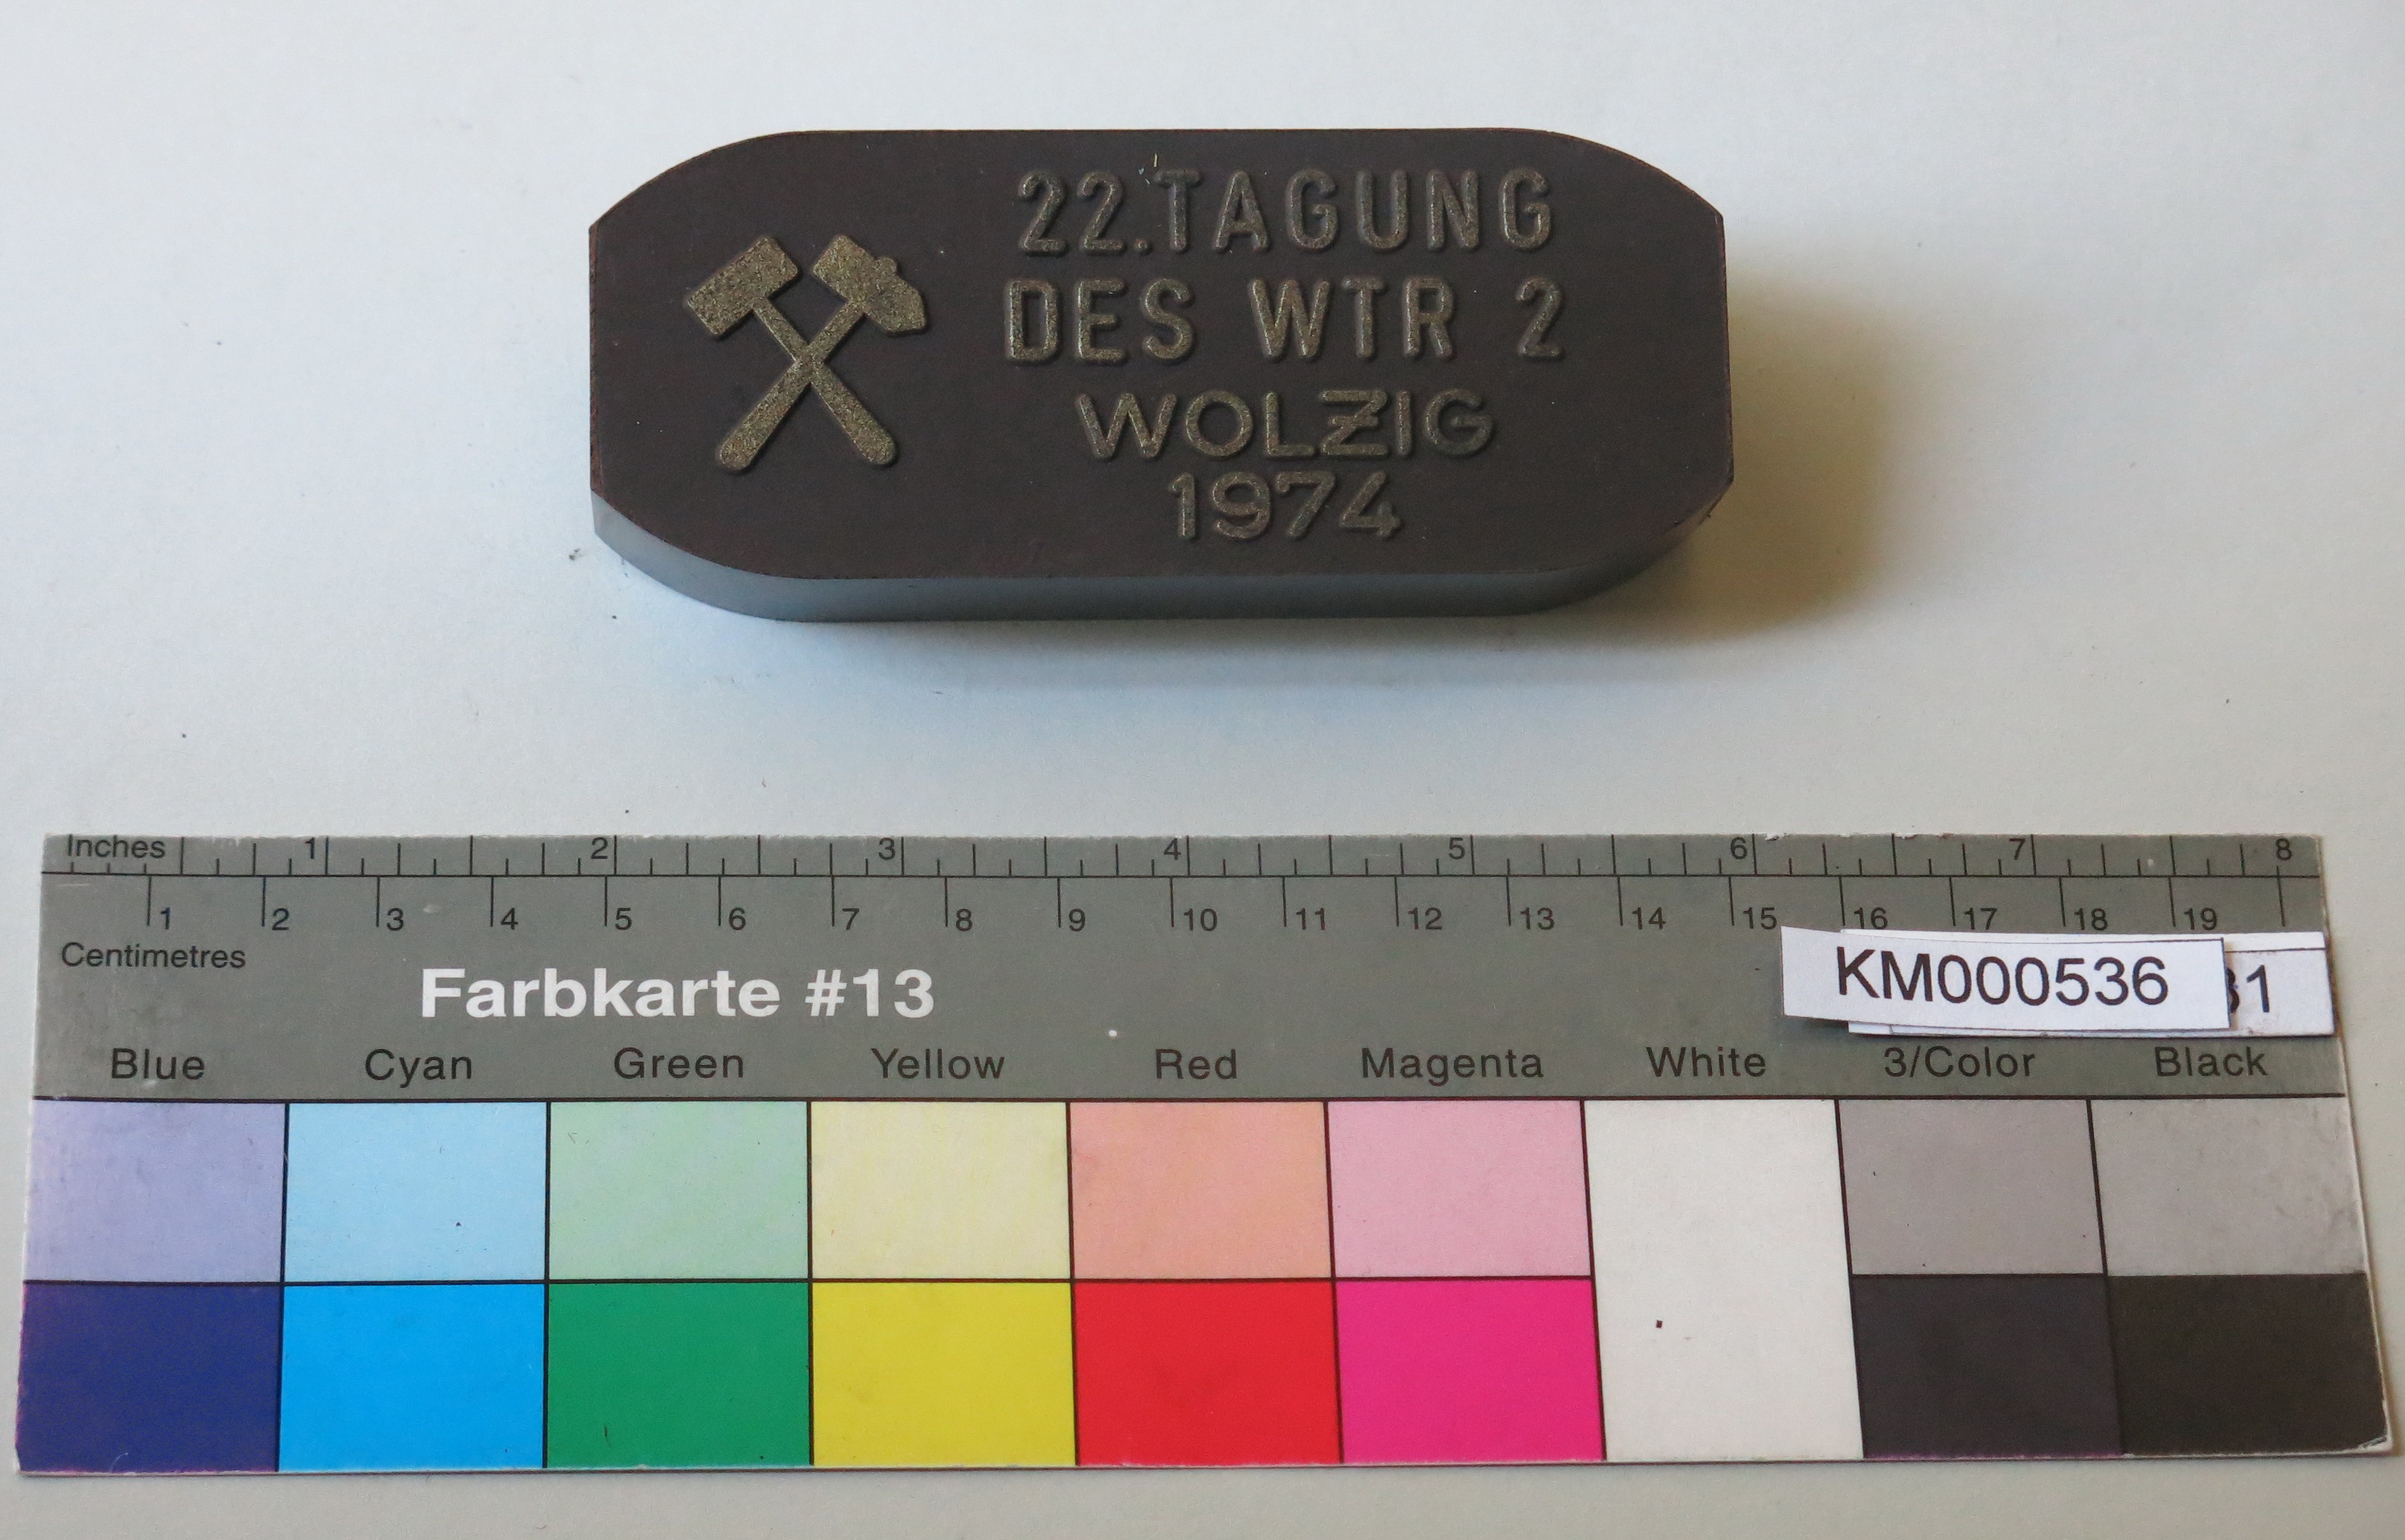 Zierbrikett "22. TAGUNG DES WTR 2 WOLZIG 1974" (Energiefabrik Knappenrode CC BY-SA)